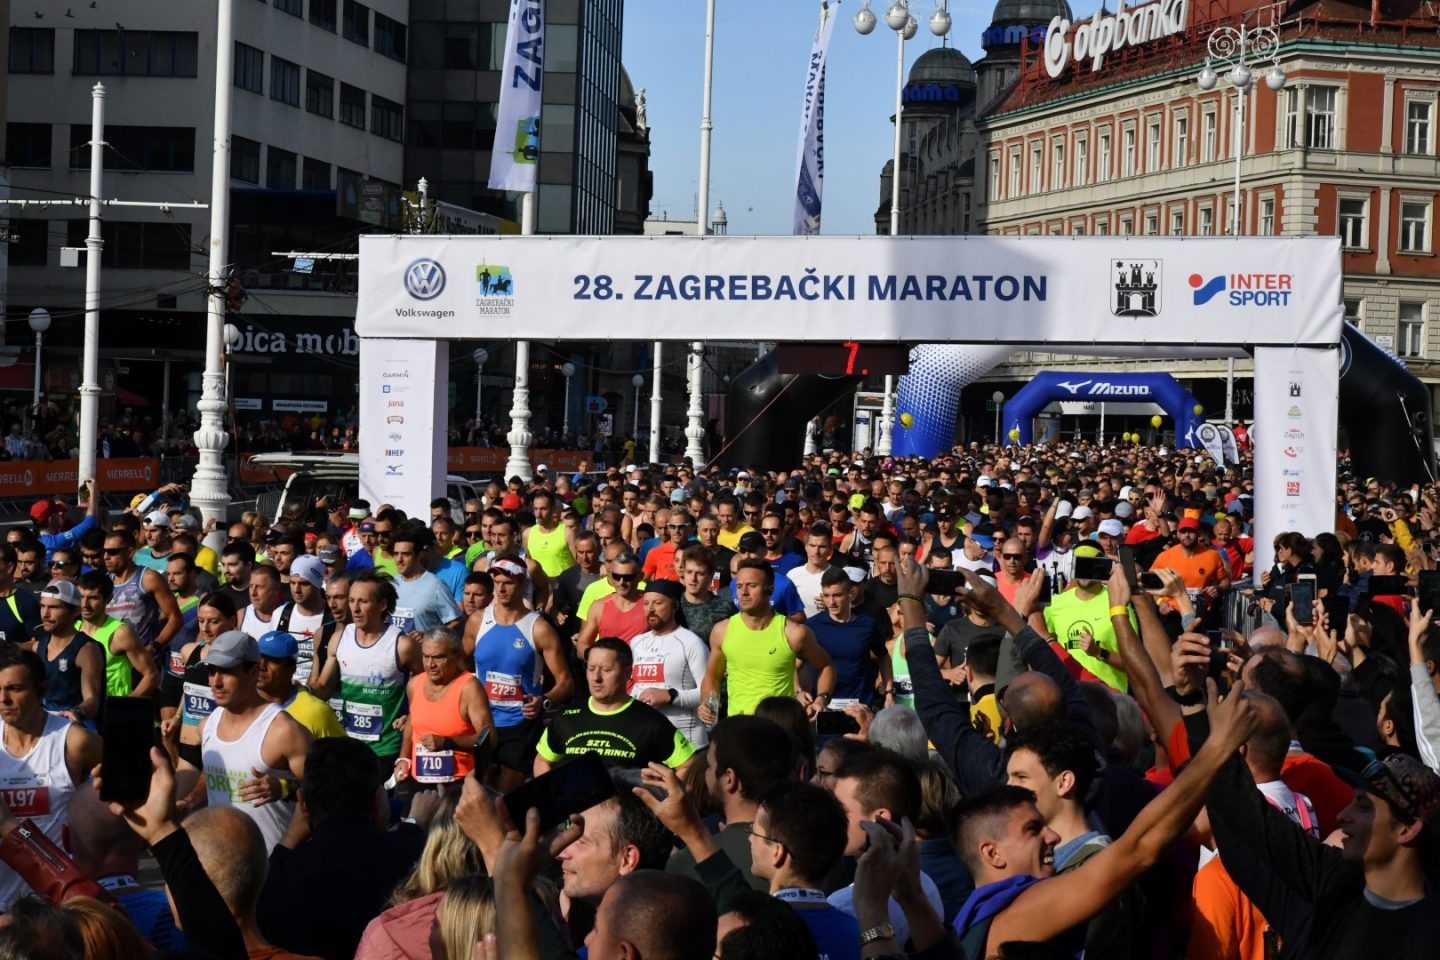 28. Zagrebački maraton